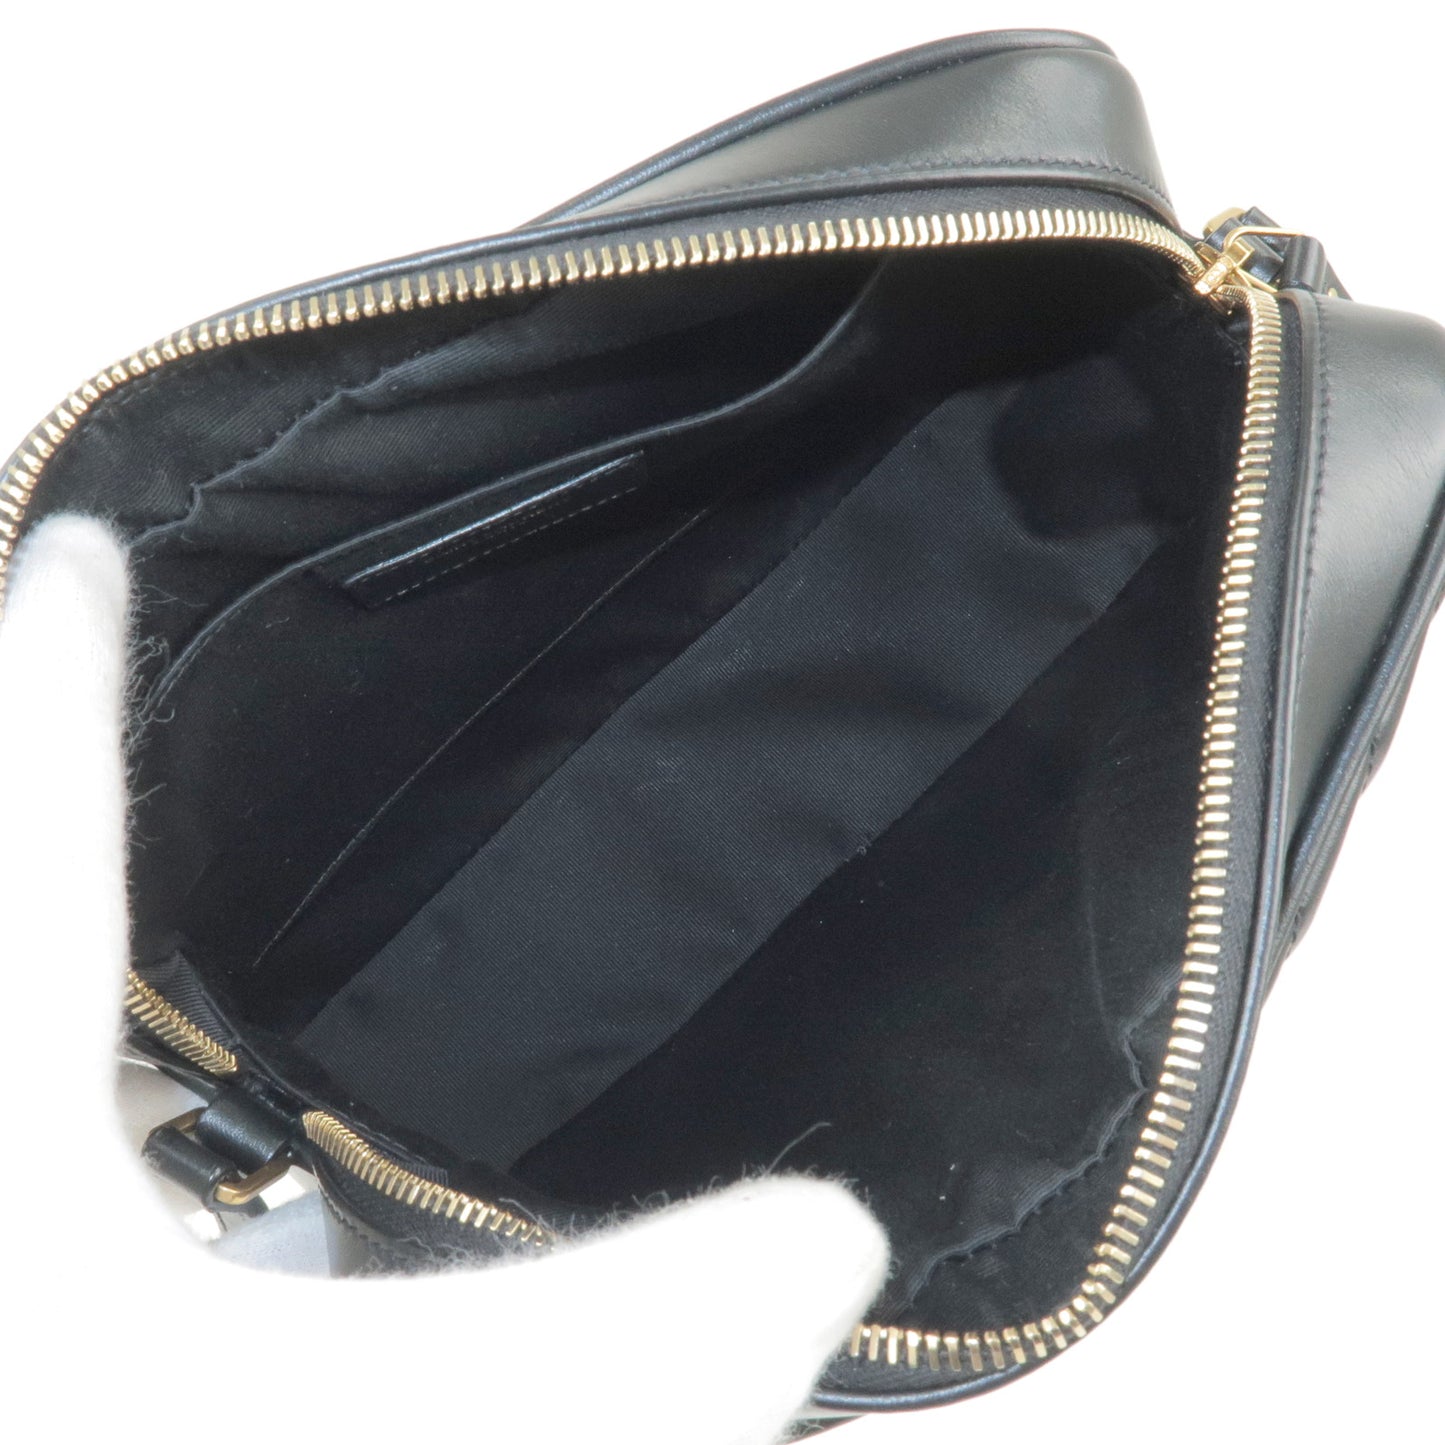 Saint Laurent PARIS Leather V-Stitch Shoulder Bag Black 612544